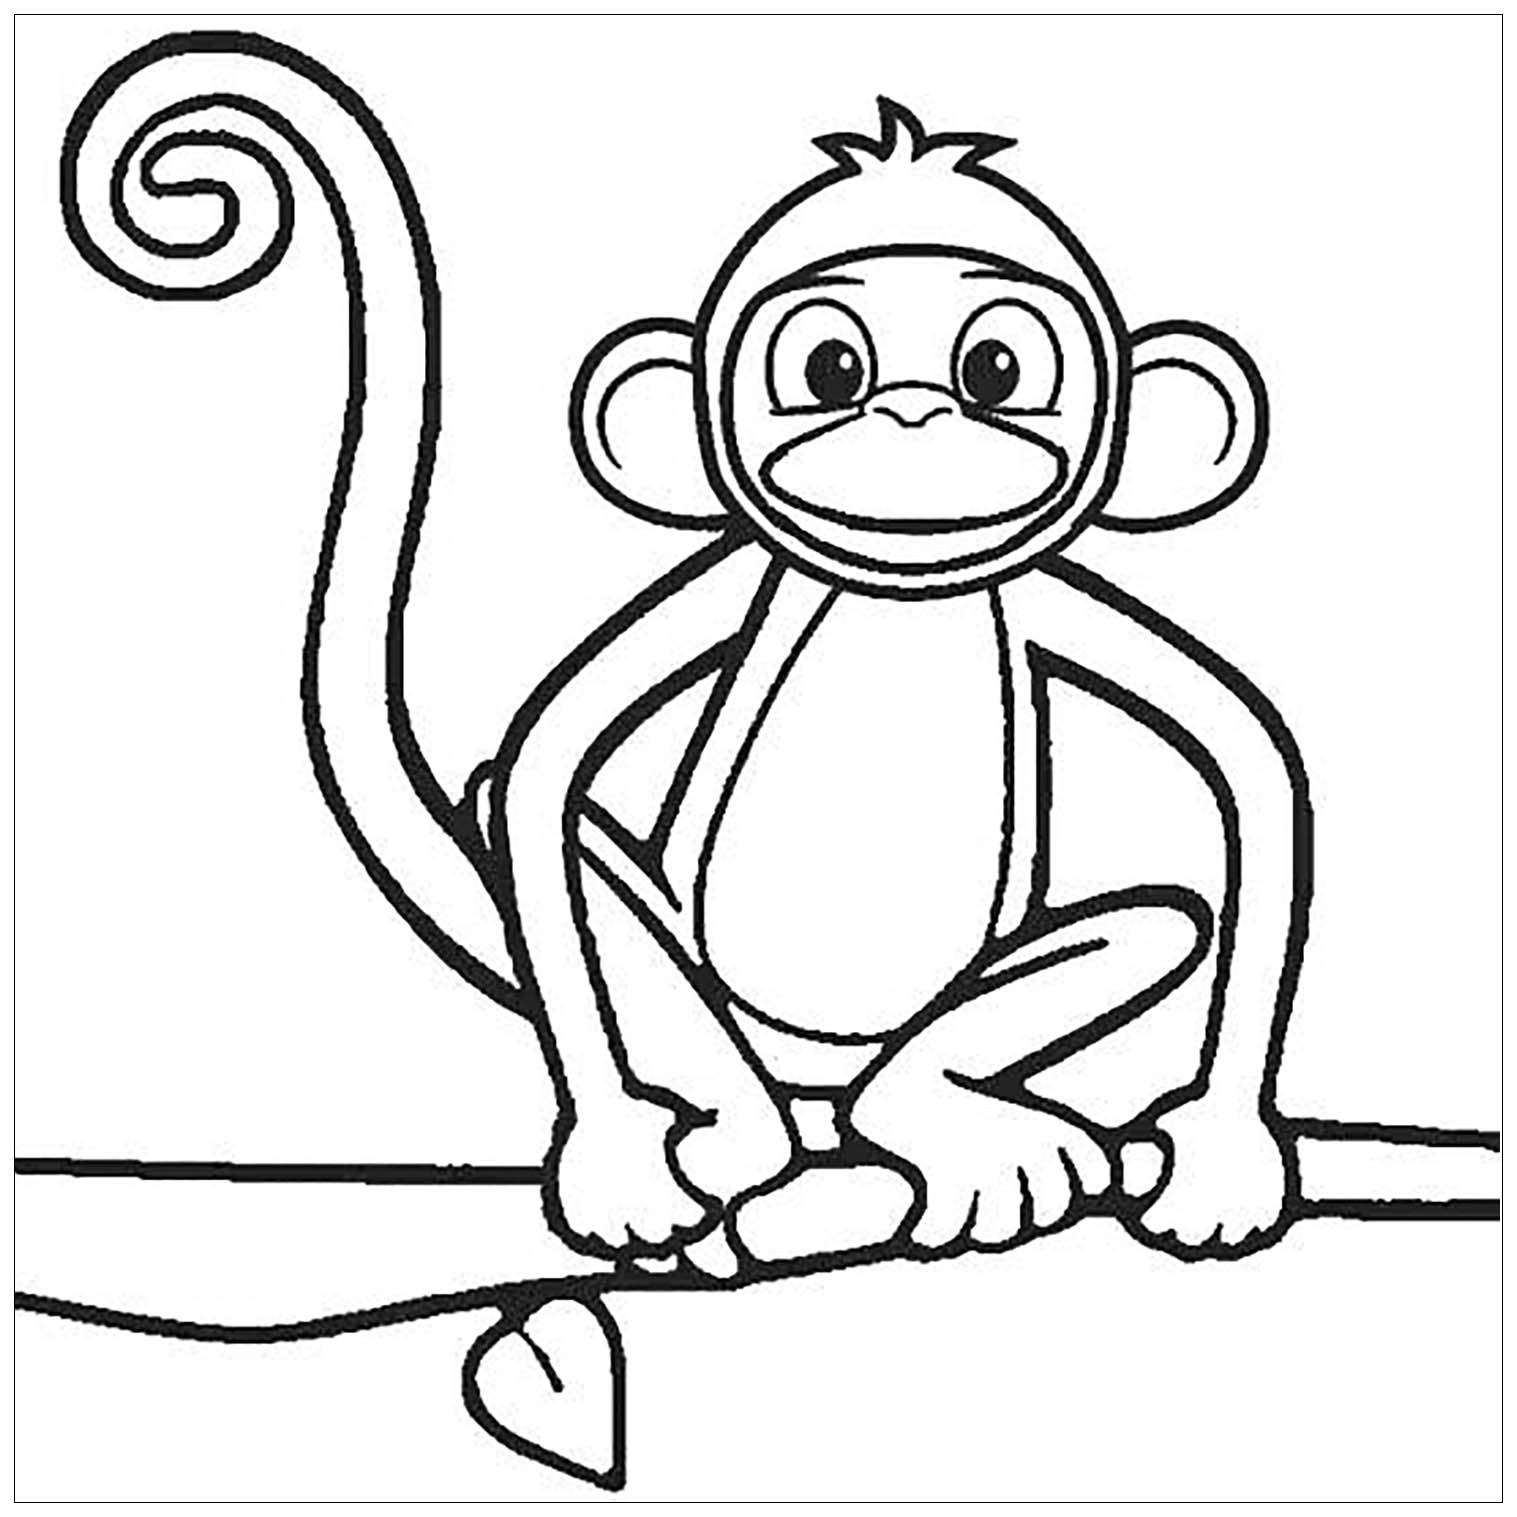 Dibujos para colorear de Monos para imprimir